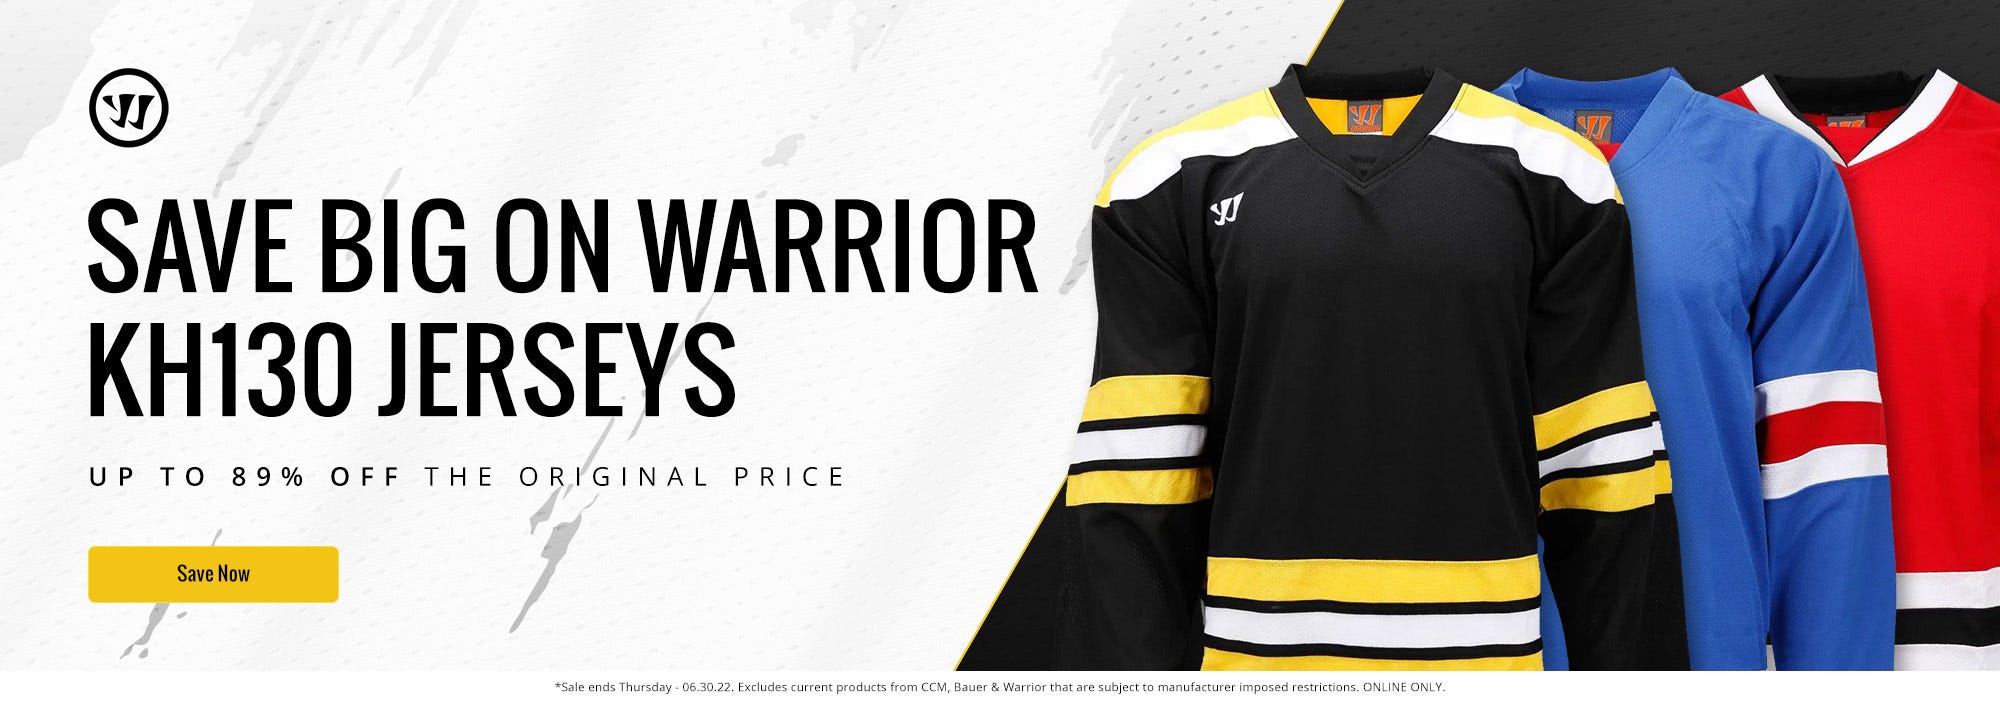 Save big on Warrior KH130 jerseys